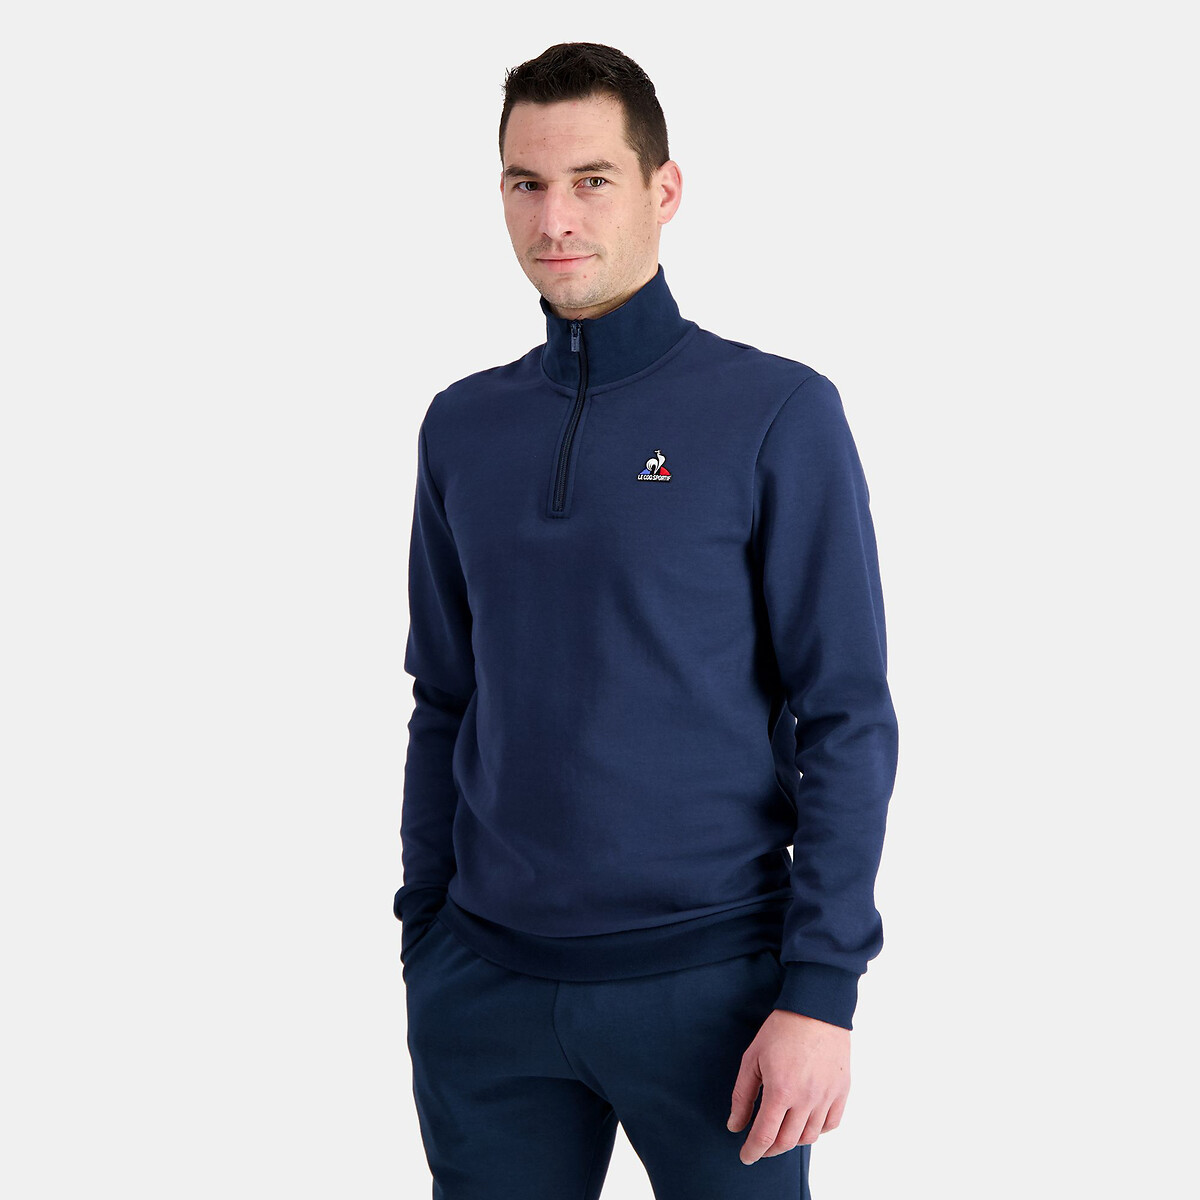 Essential Embroidered Logo Sweatshirt in Cotton Mix with Half Zip